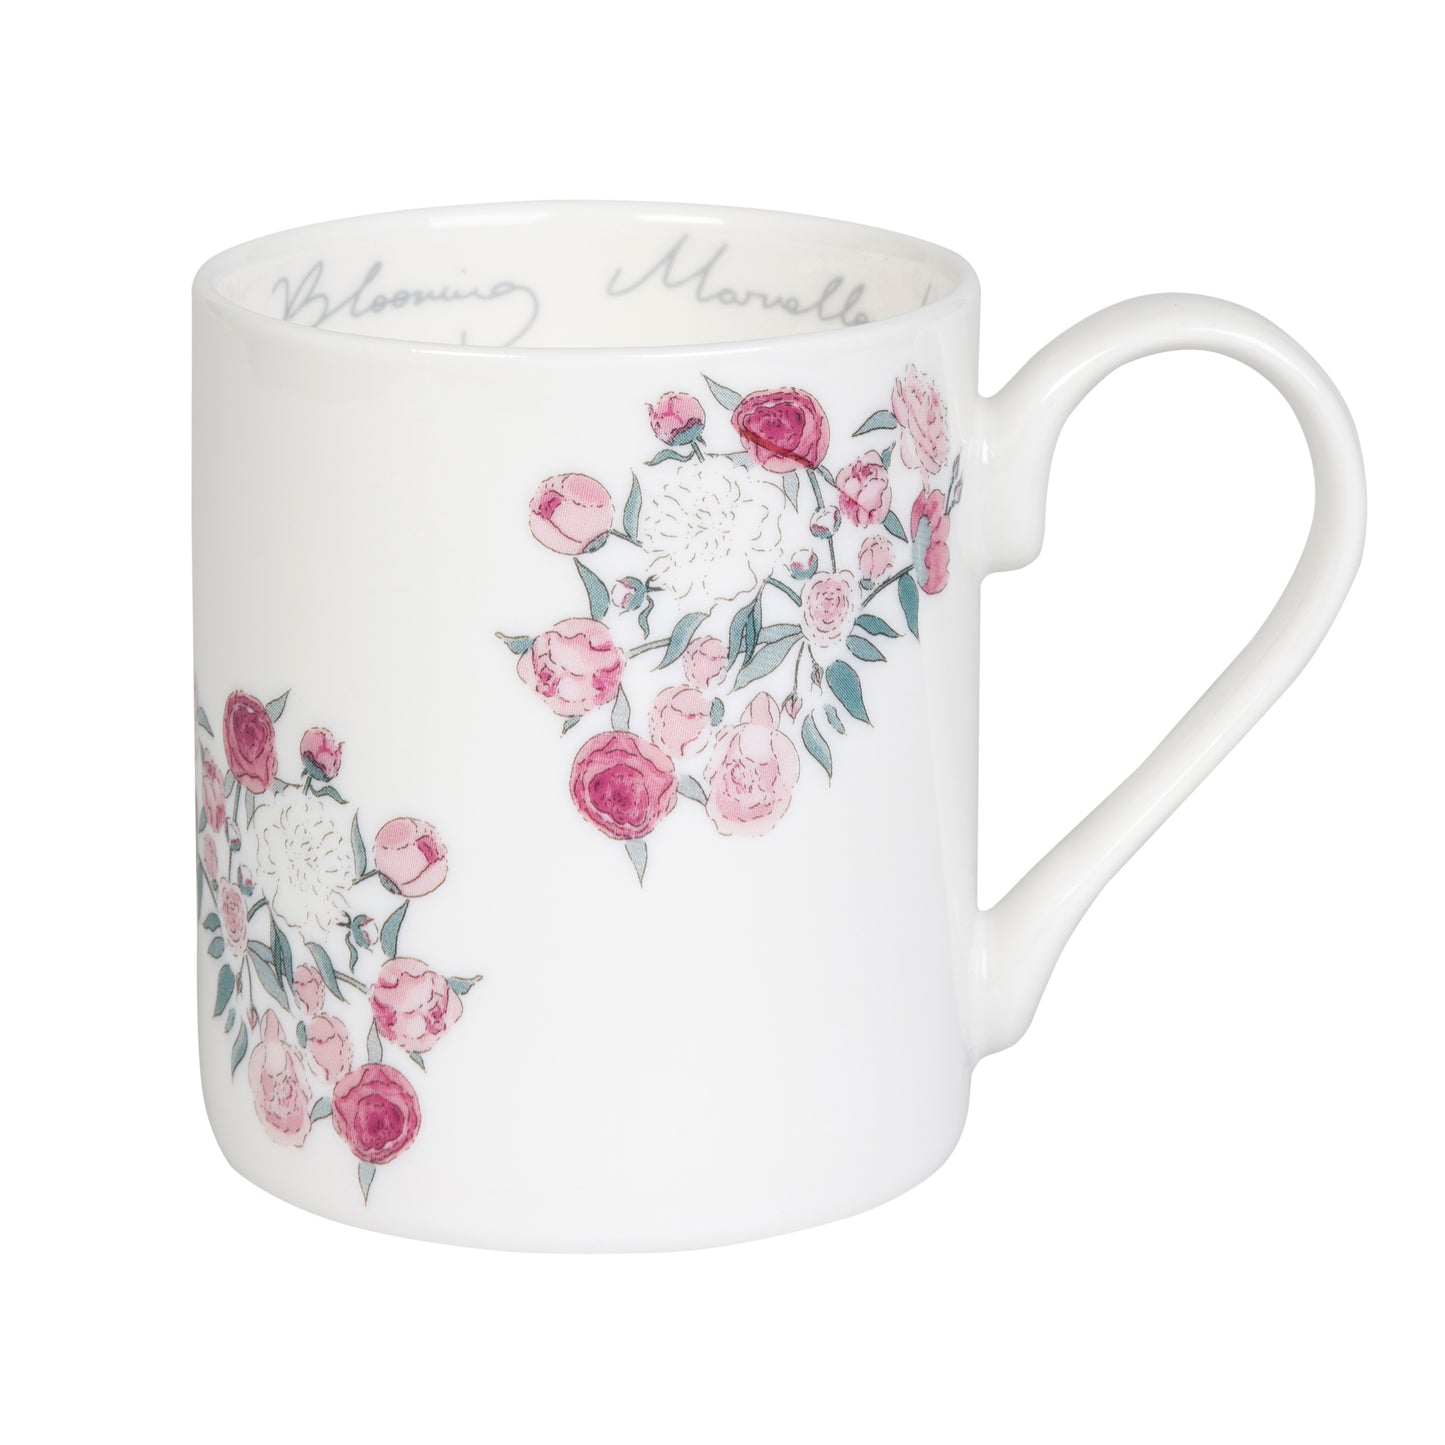 Sophie Allport Mug, Blooming Marvellous